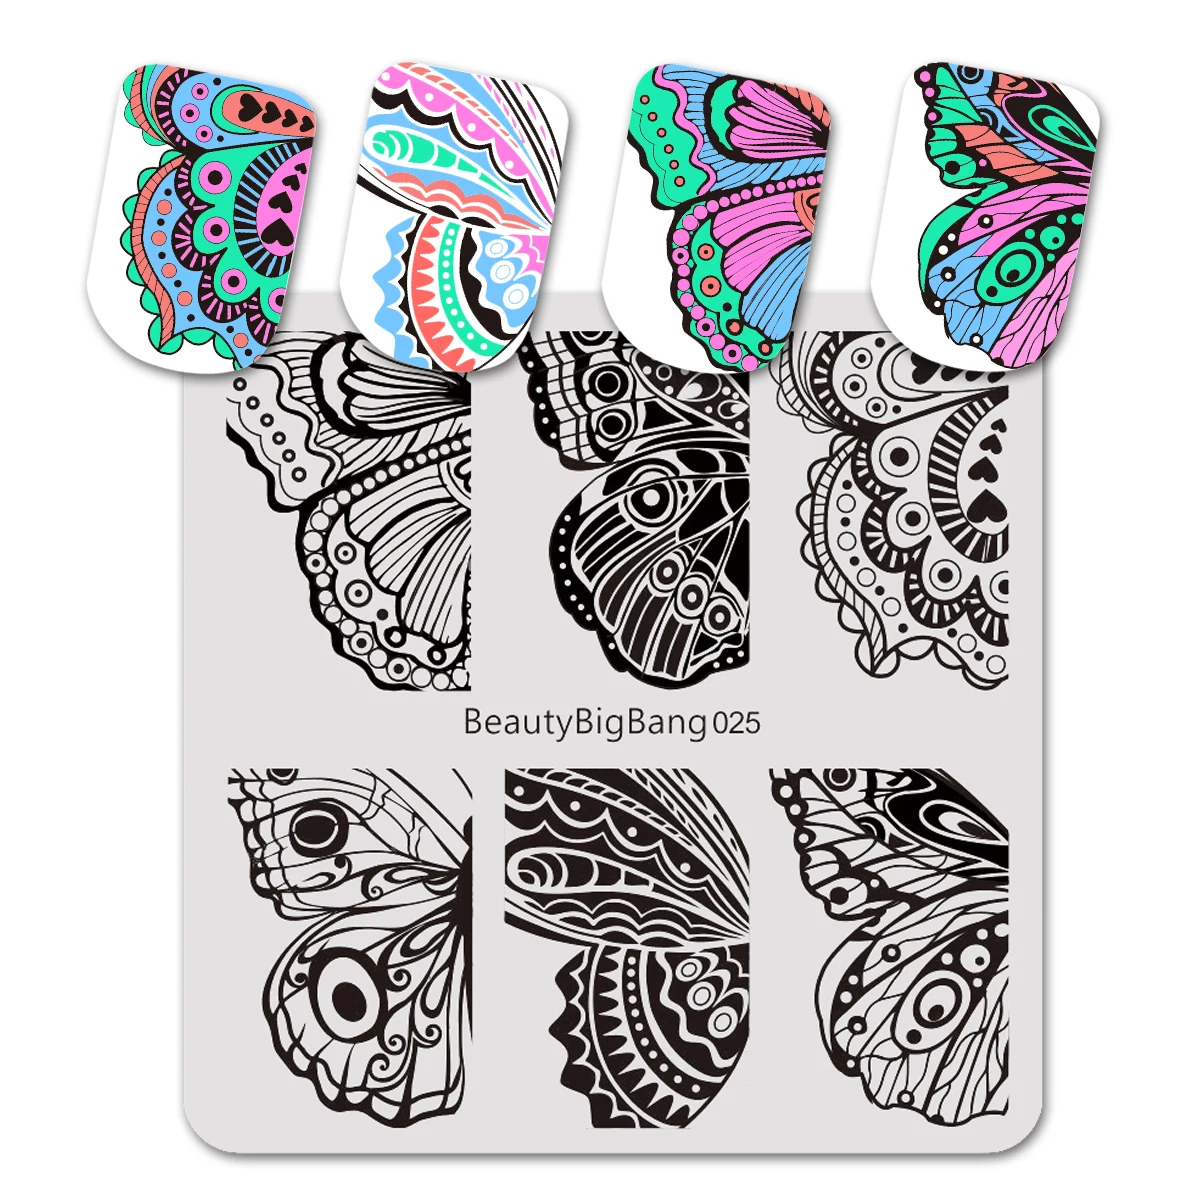 BeautyBigBang пластины для стемпинга ногтей 029 кружевная Цветочная тема квадратная пластина для дизайна ногтей печатная пластина украшение+ FL0045-1A - Цвет: 703556408367